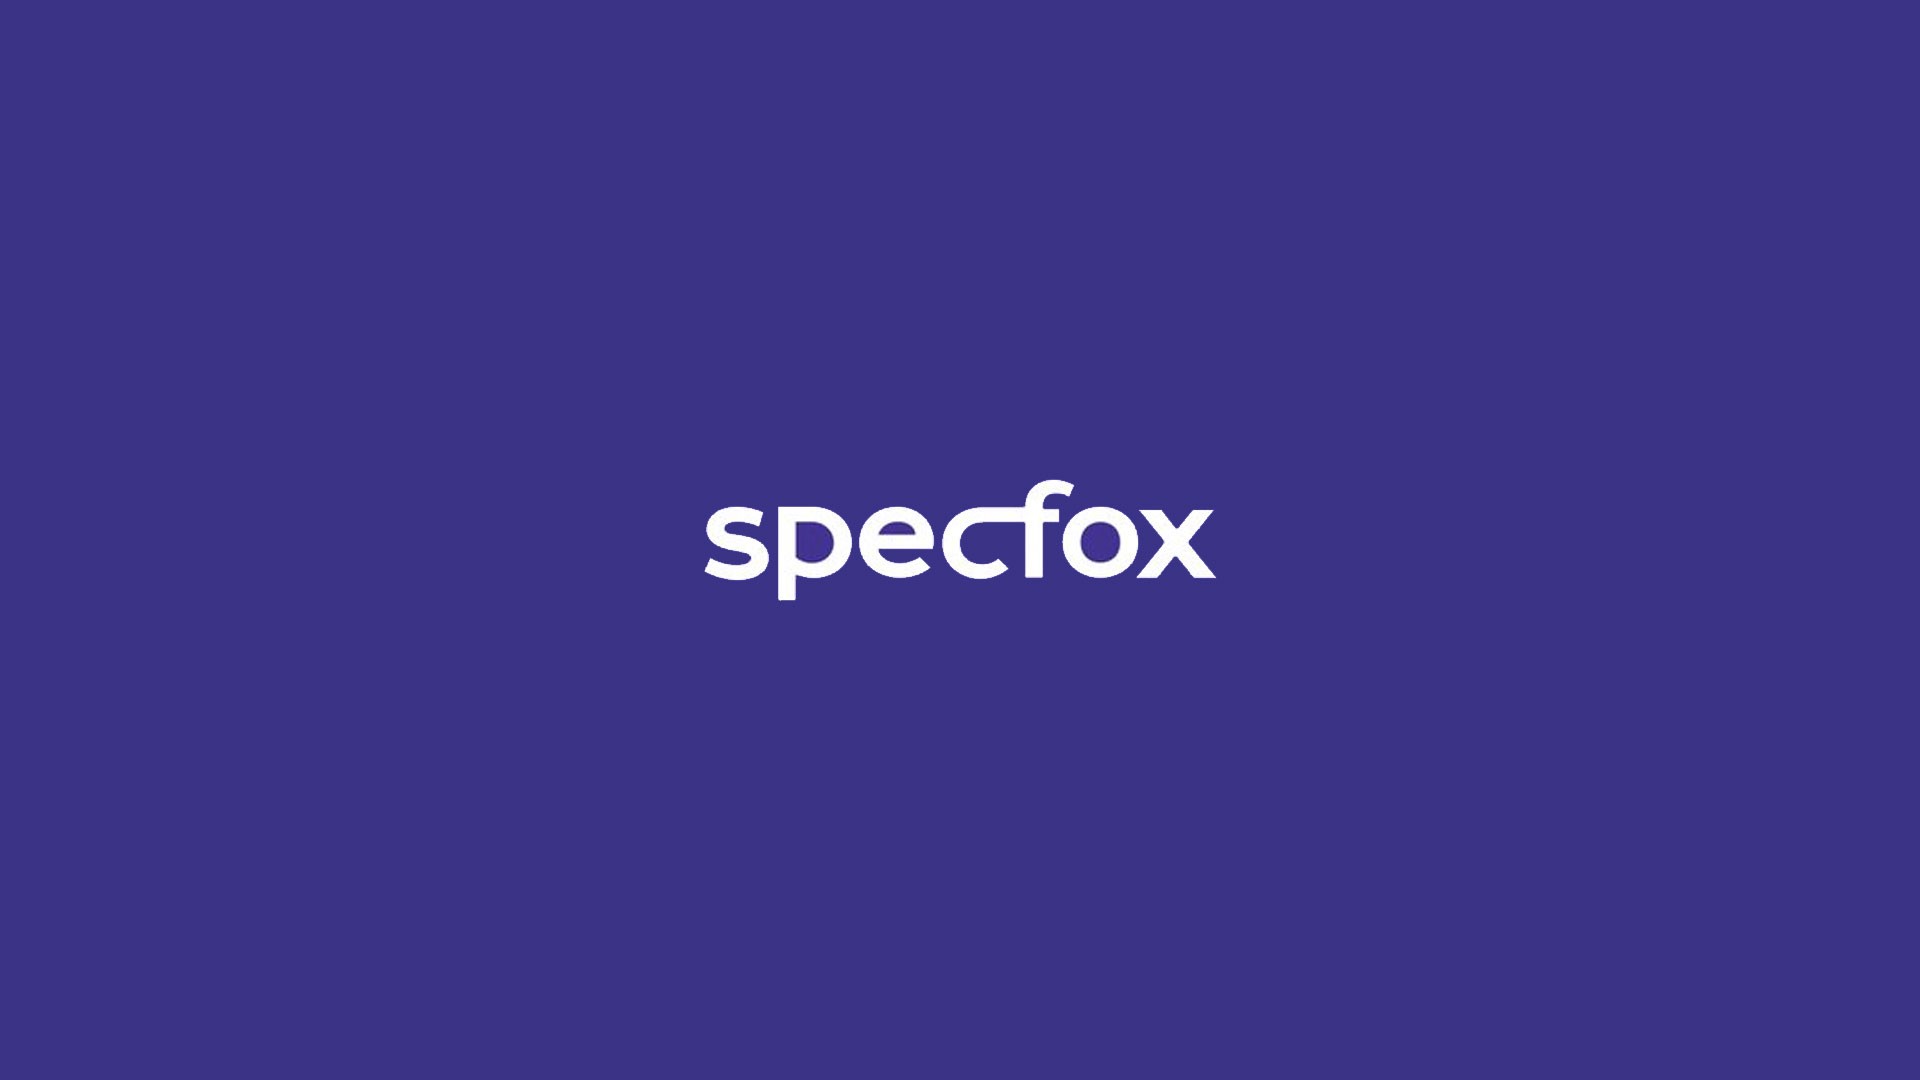 hedgehog lab acquire Specfox